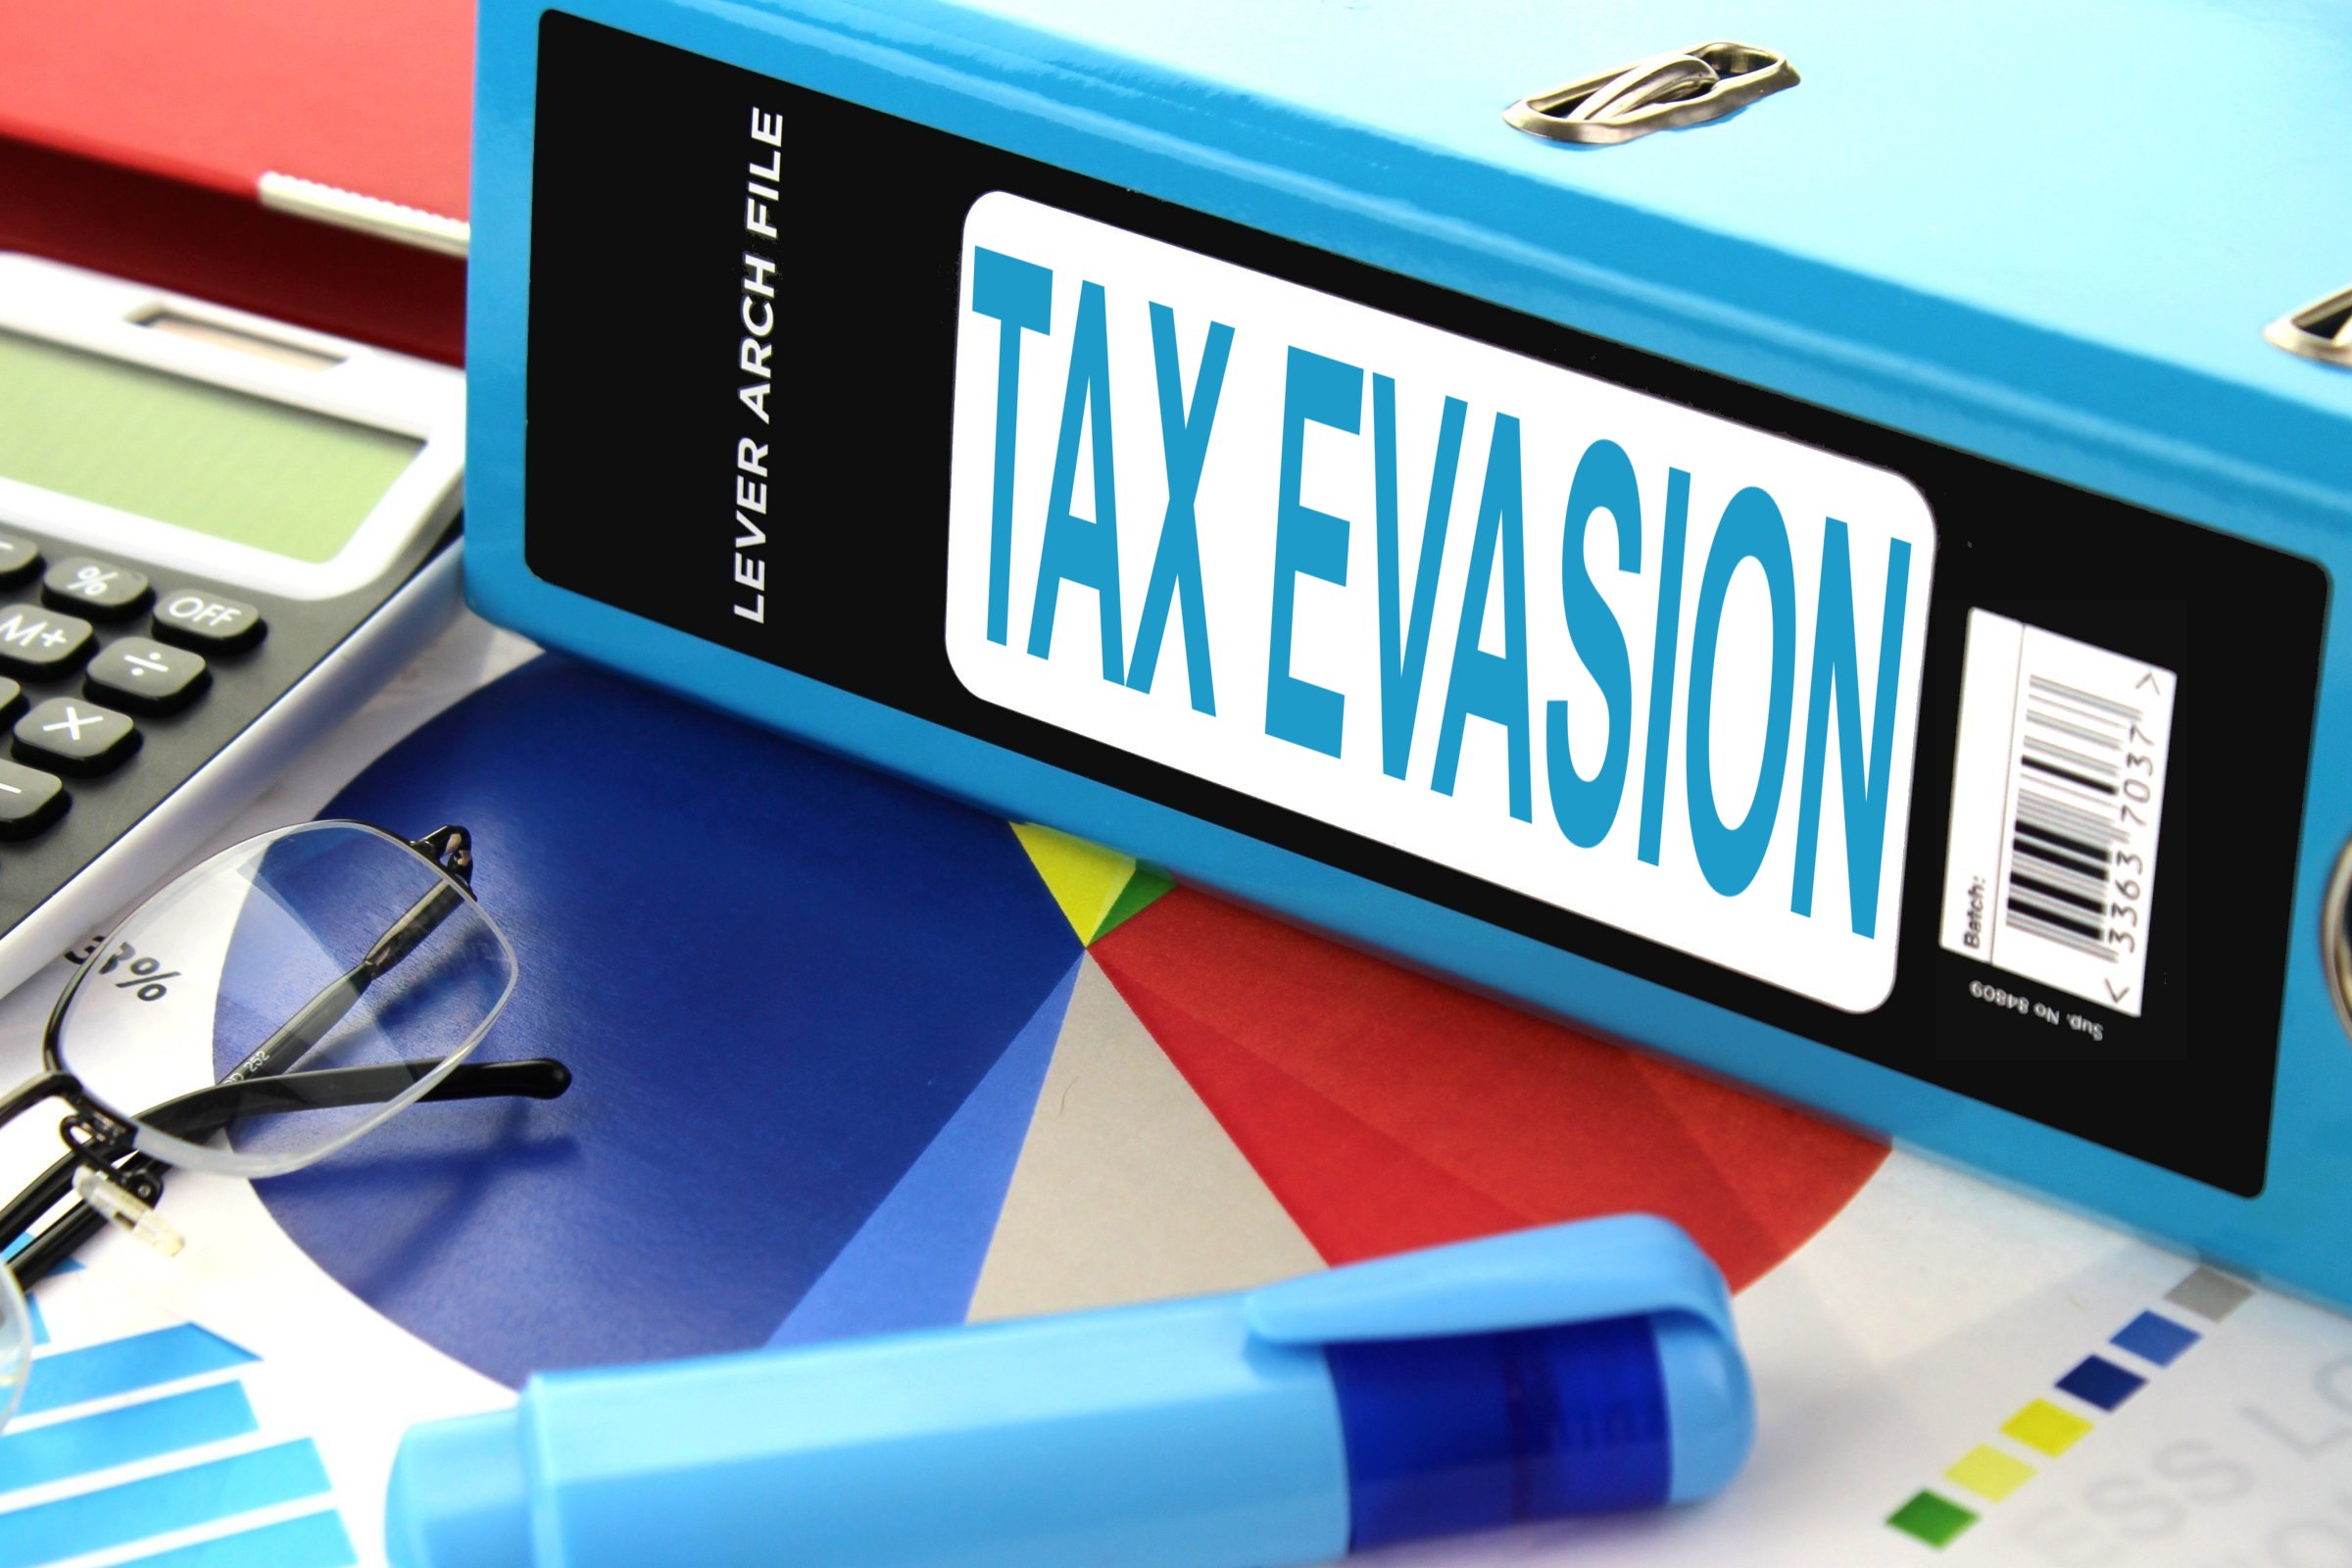 tax evasion